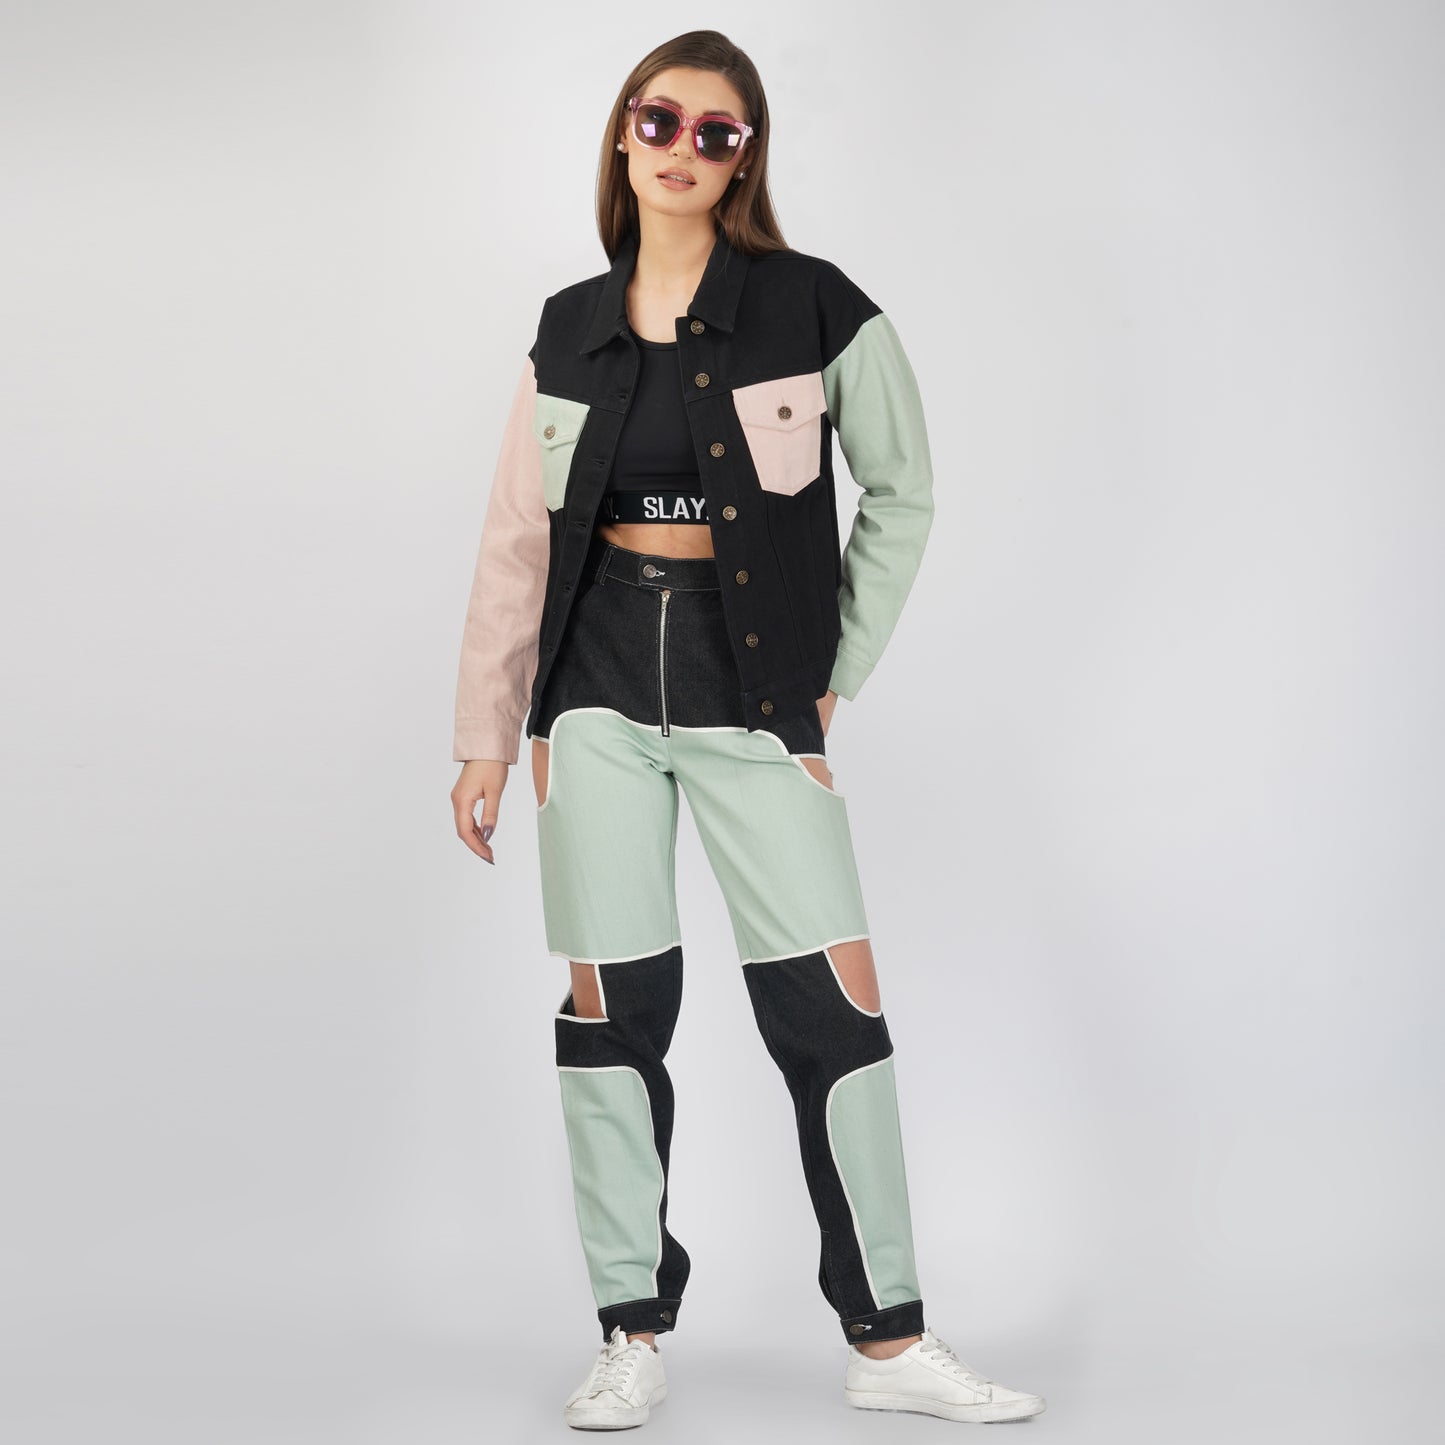 SLAY. Women's Flap Pocket Colorblock Denim Jacket & Jeans Co-ord Set